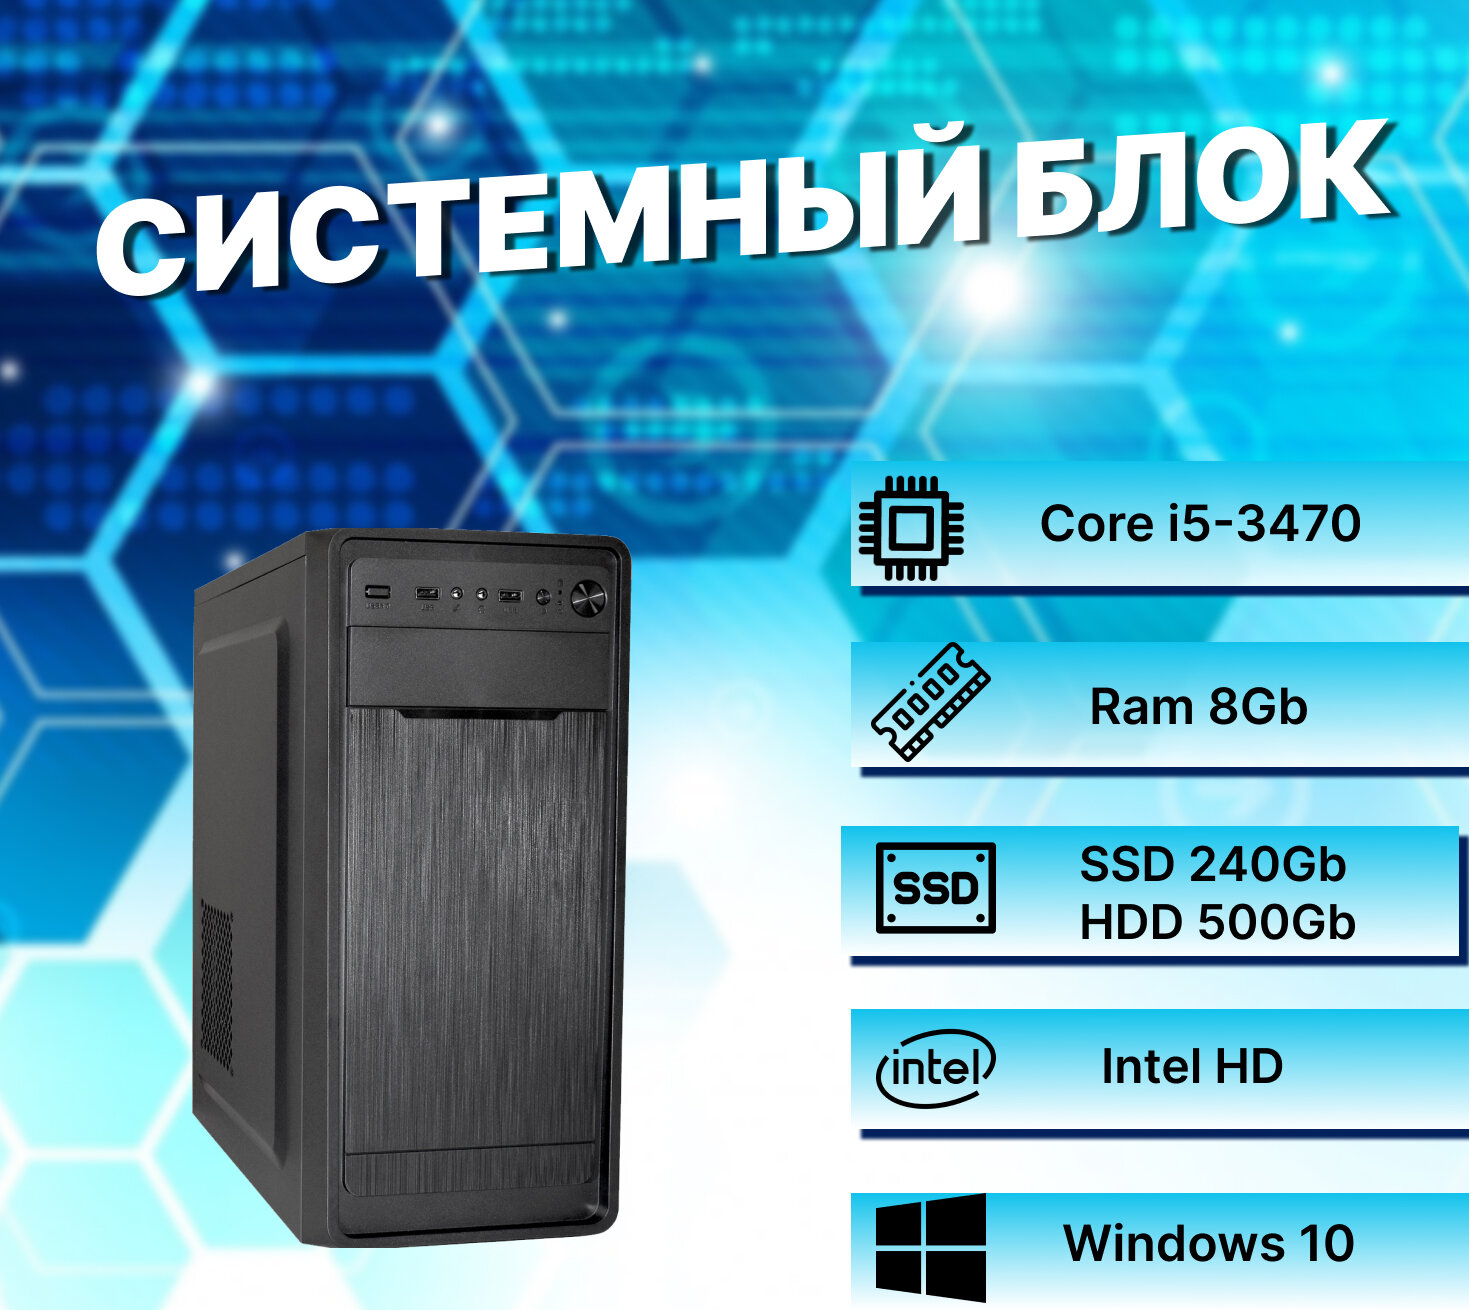 Системный блок Intel Core I5-3470 (3.2ГГц)/ RAM 8Gb/ SSD 240Gb/ HDD 500Gb/ Intel HD/ Windows 10 Pro